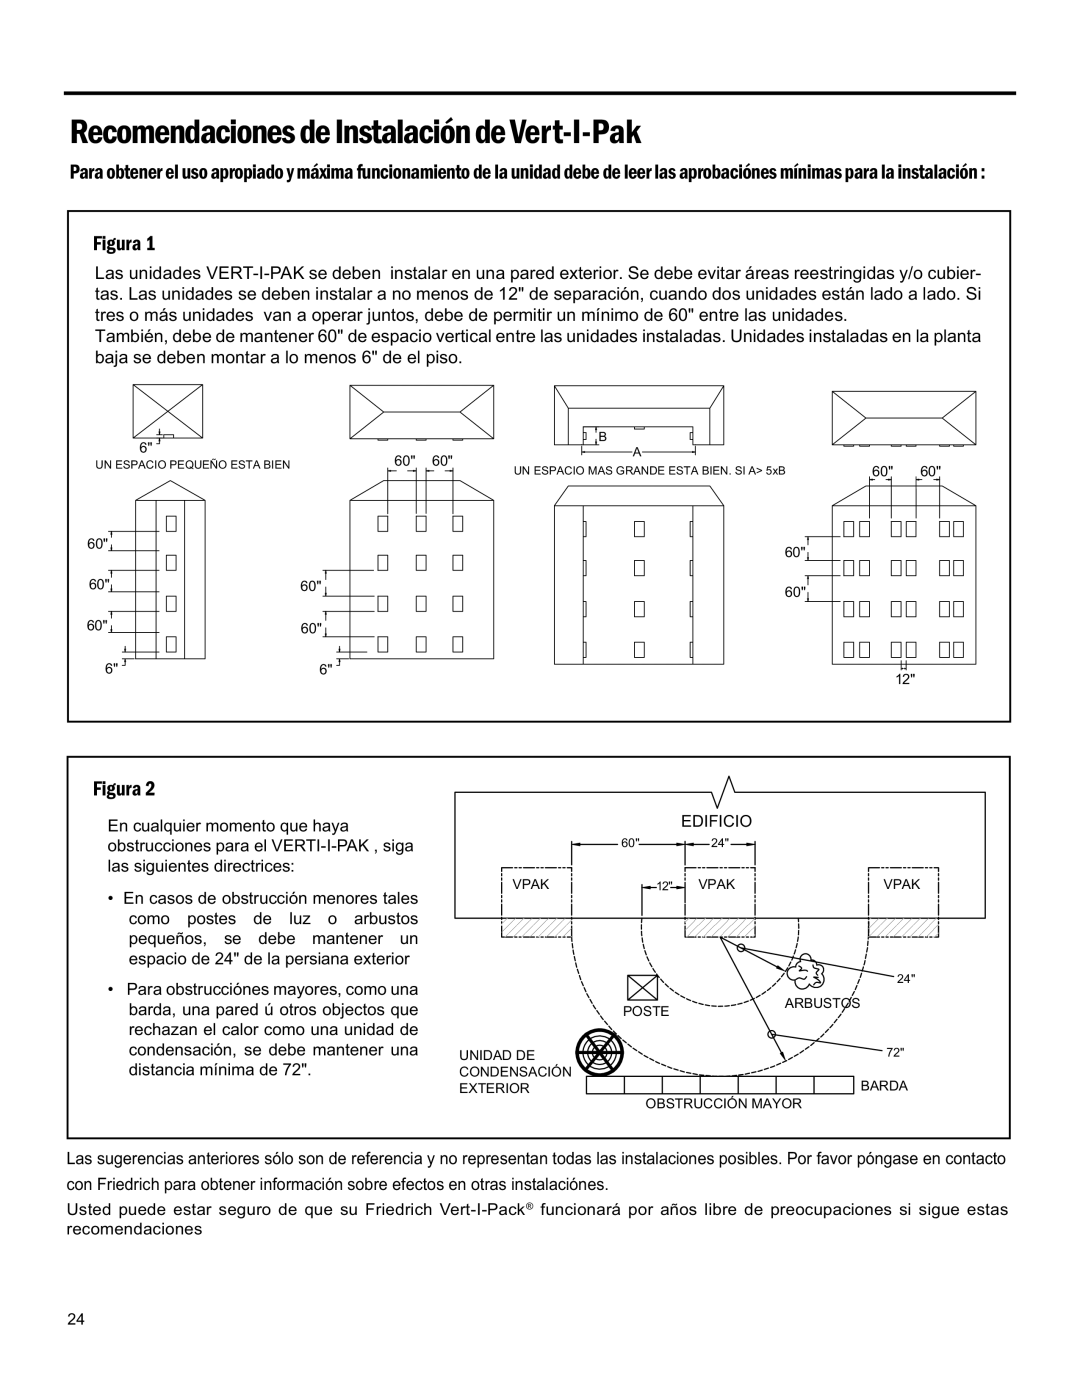 Friedrich 920-075-13 (1-11) operation manual Recomendacionesdeinstalacióndevert-I-Pak, Edificio 